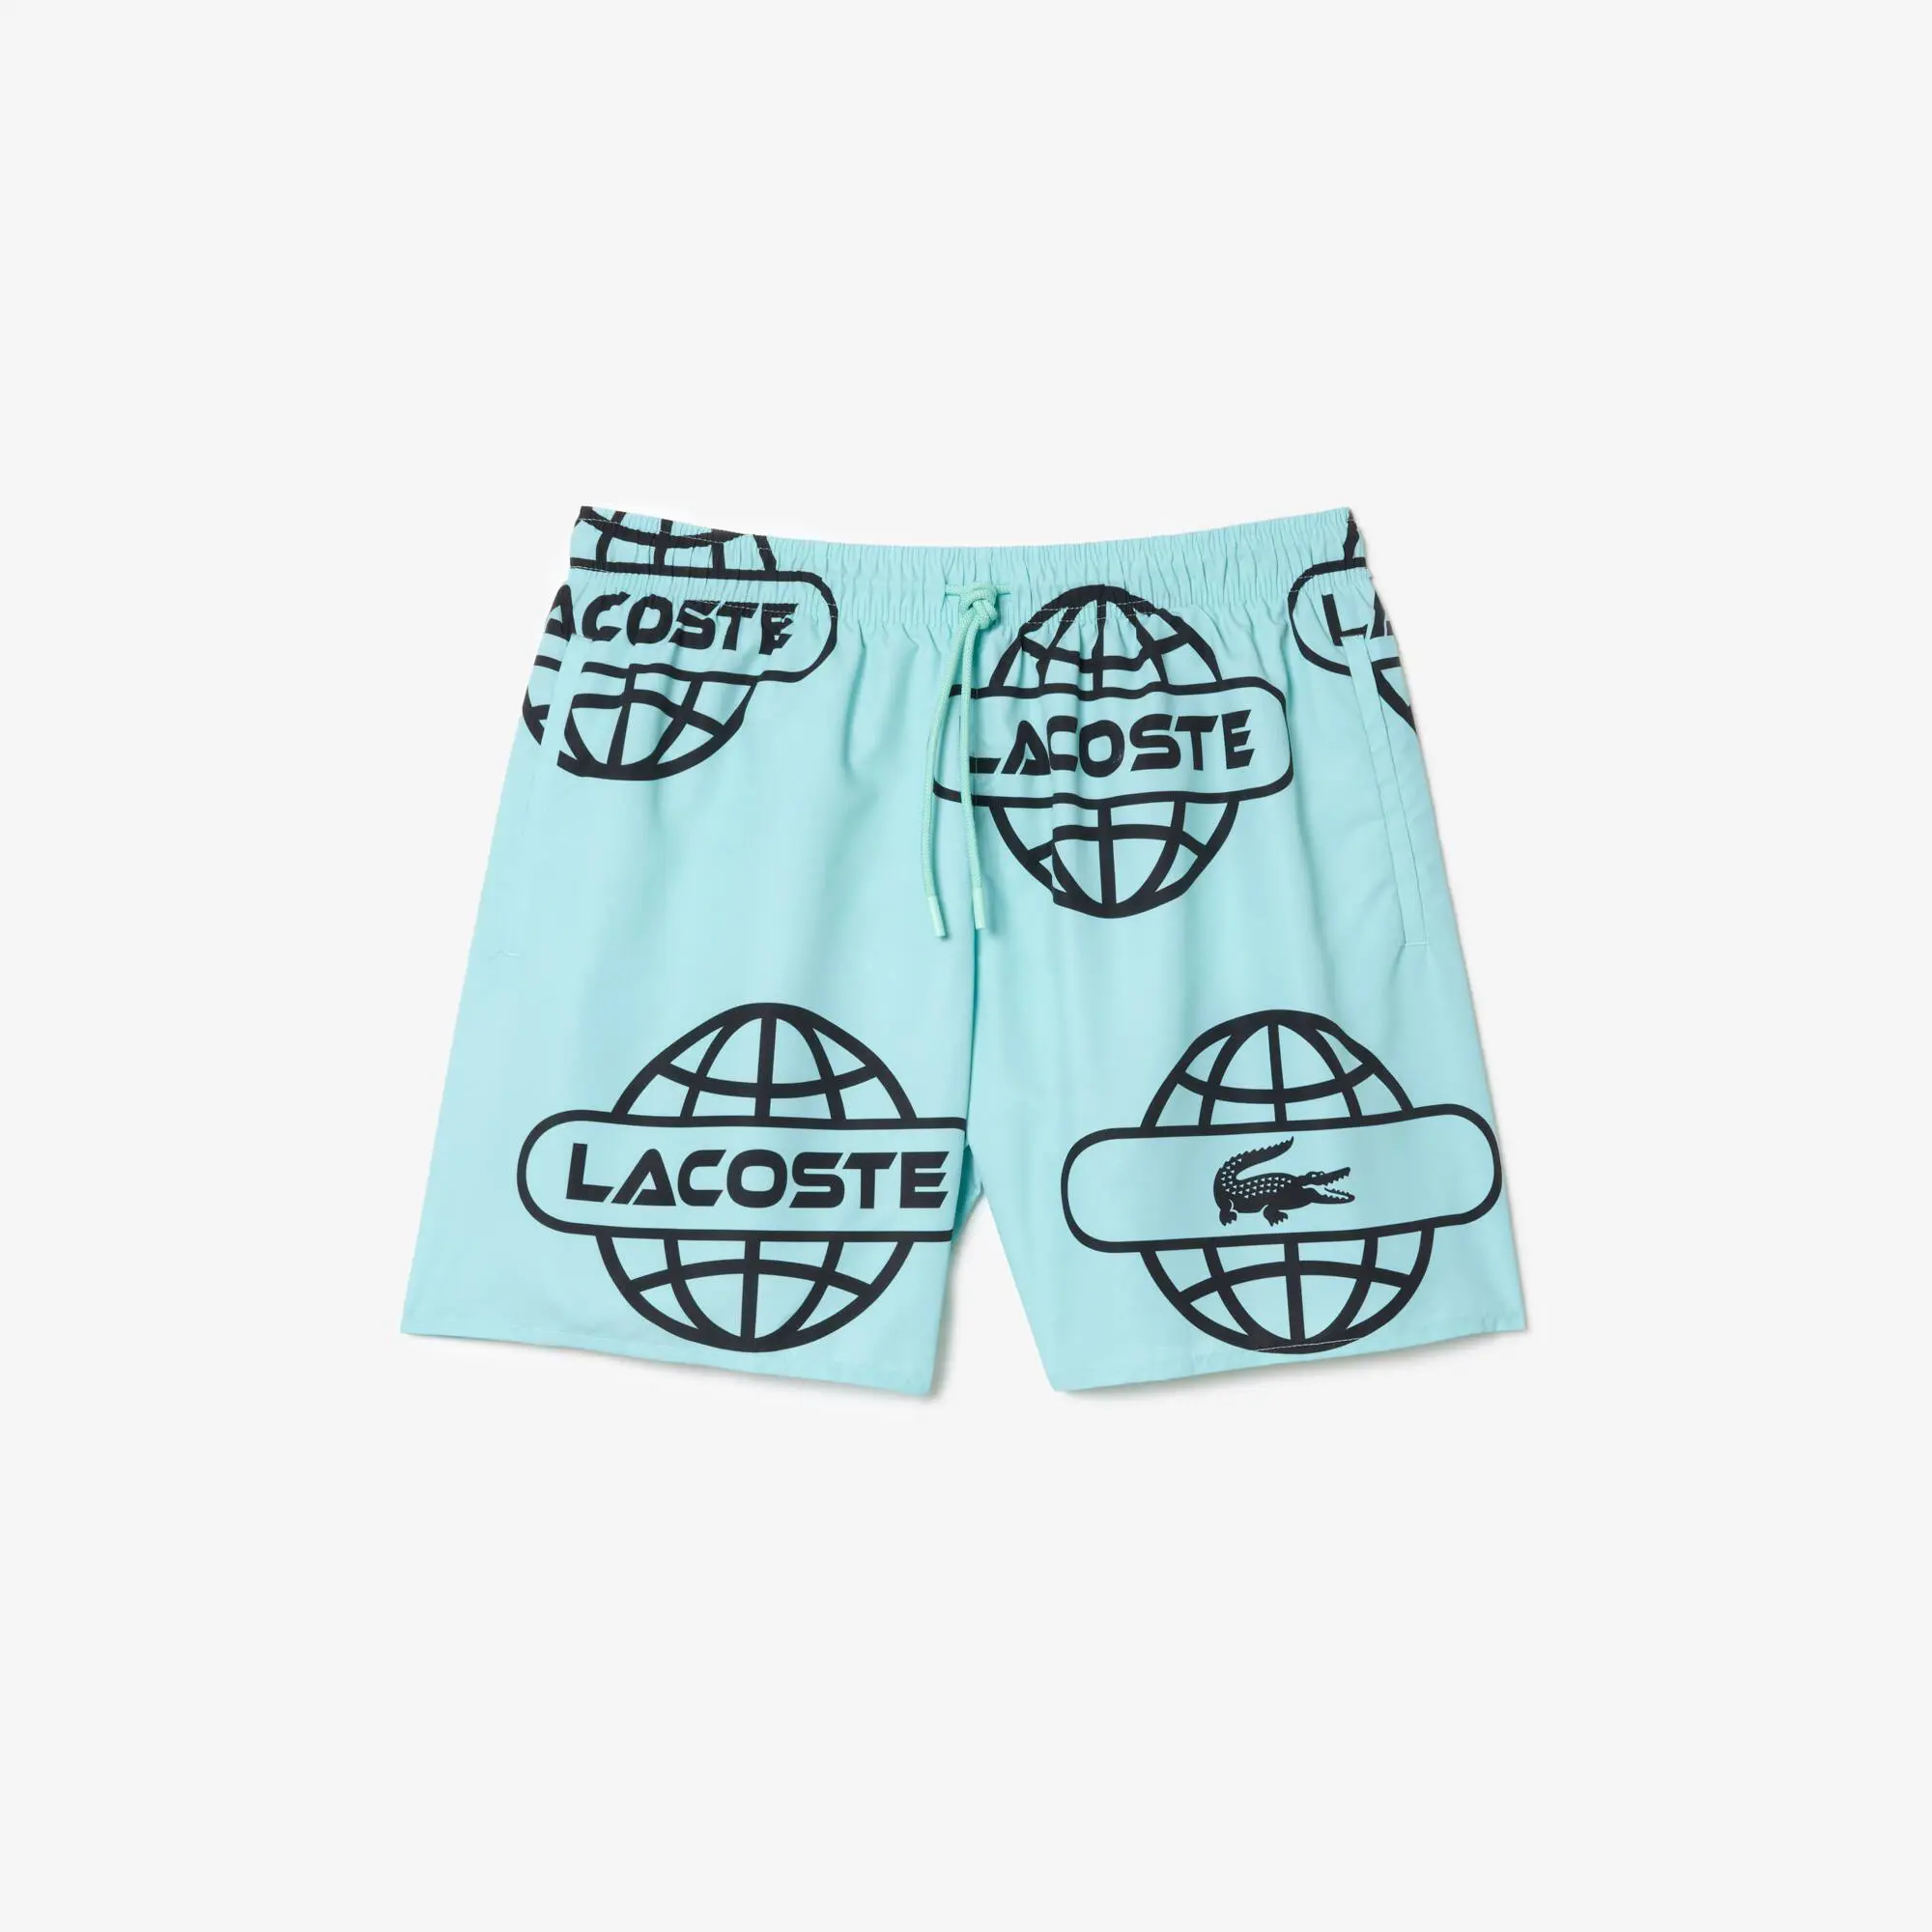 Lacoste Globe Print Swimsuit. 2